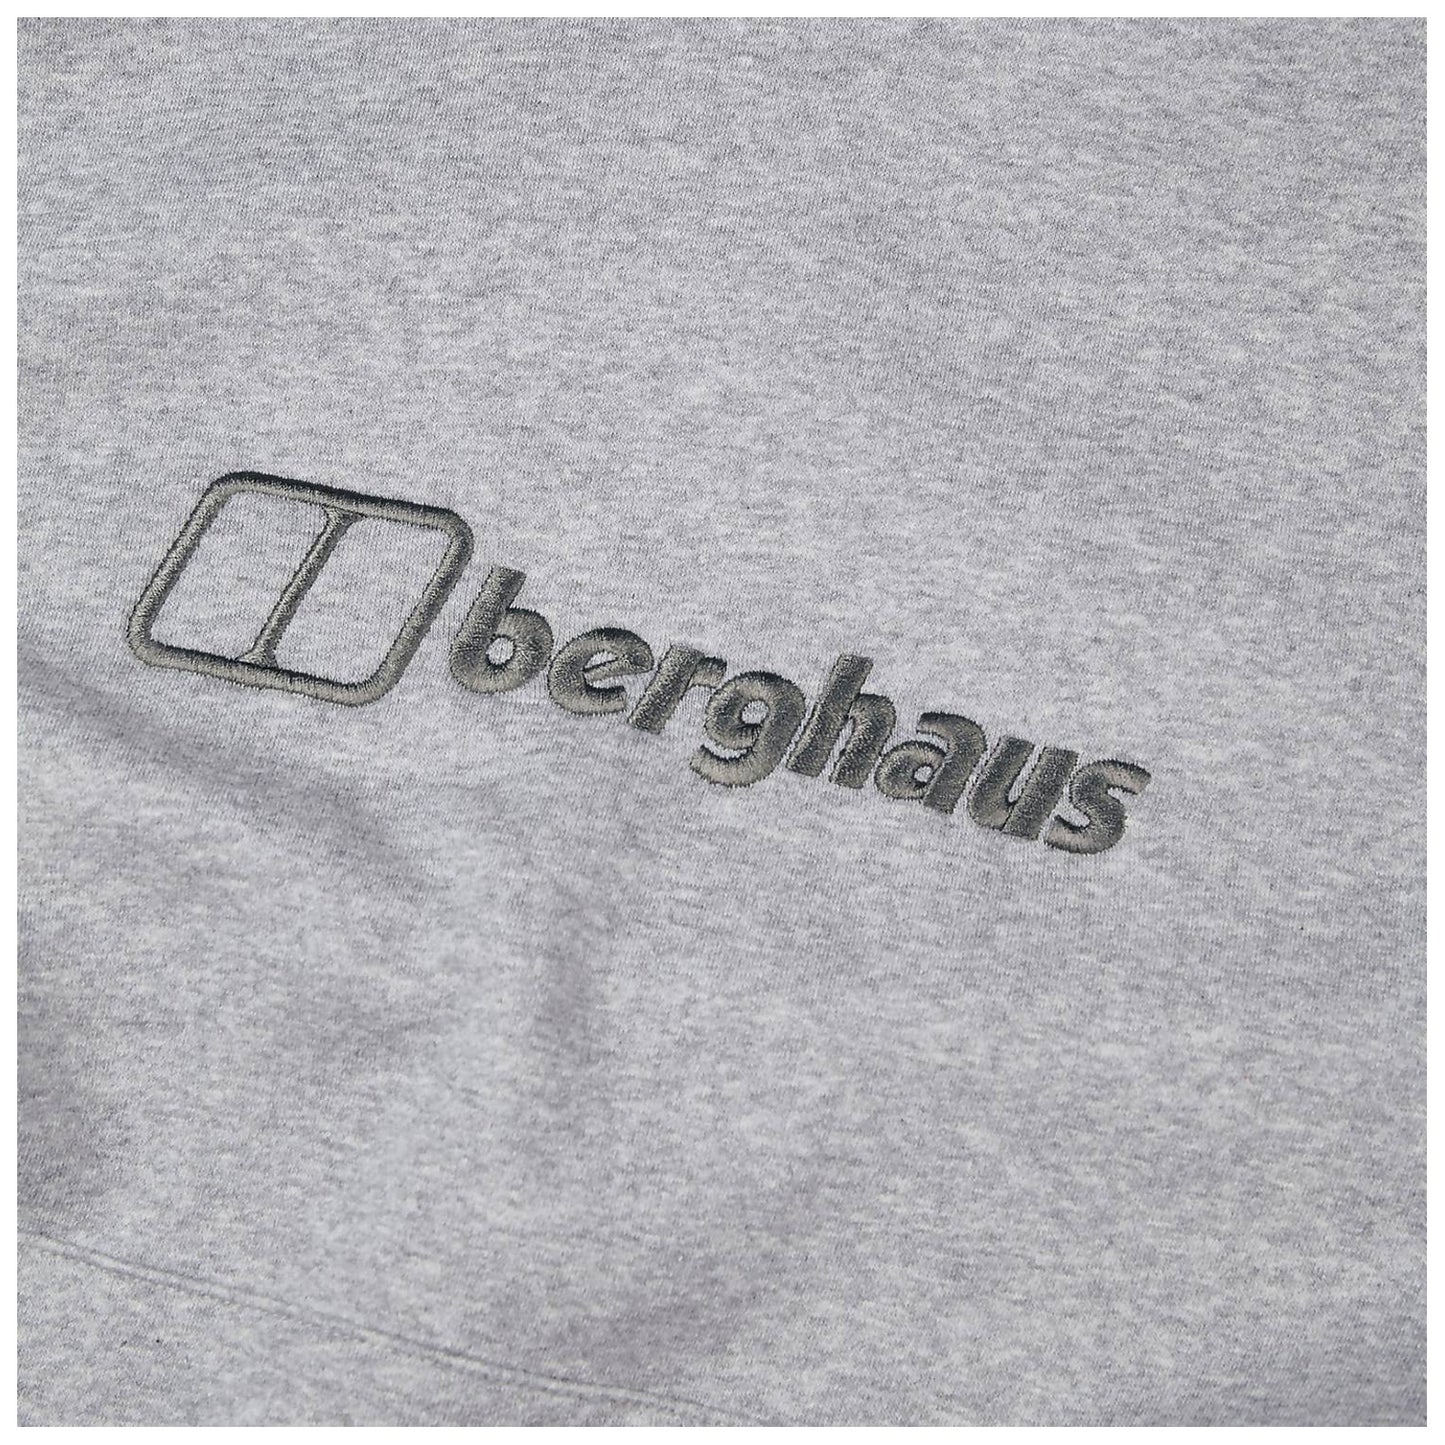 Berghaus Mens Logo Hoodie